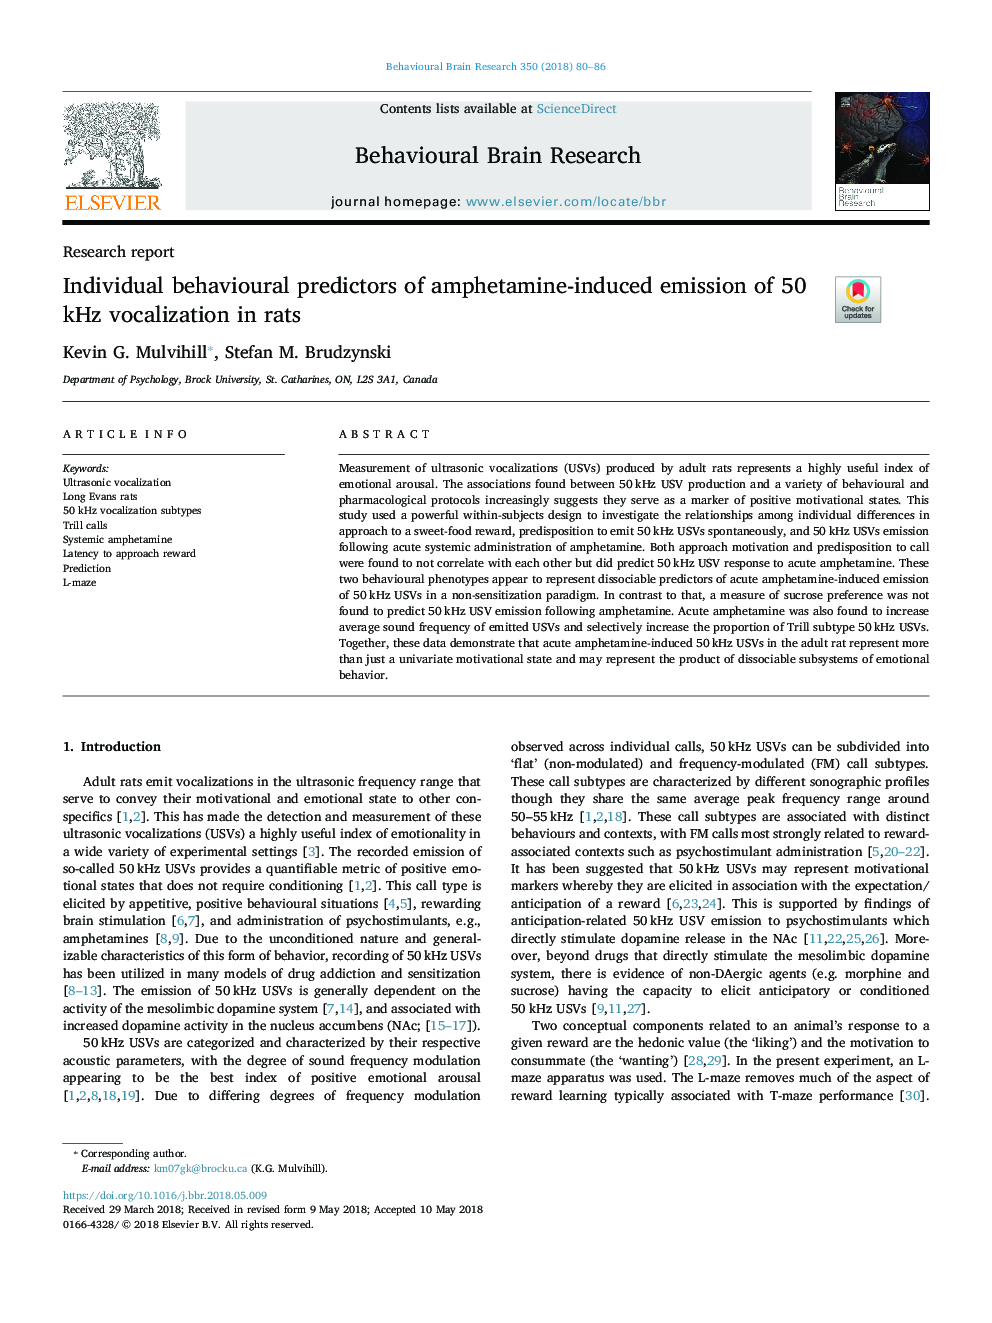 Individual behavioural predictors of amphetamine-induced emission of 50 kHz vocalization in rats